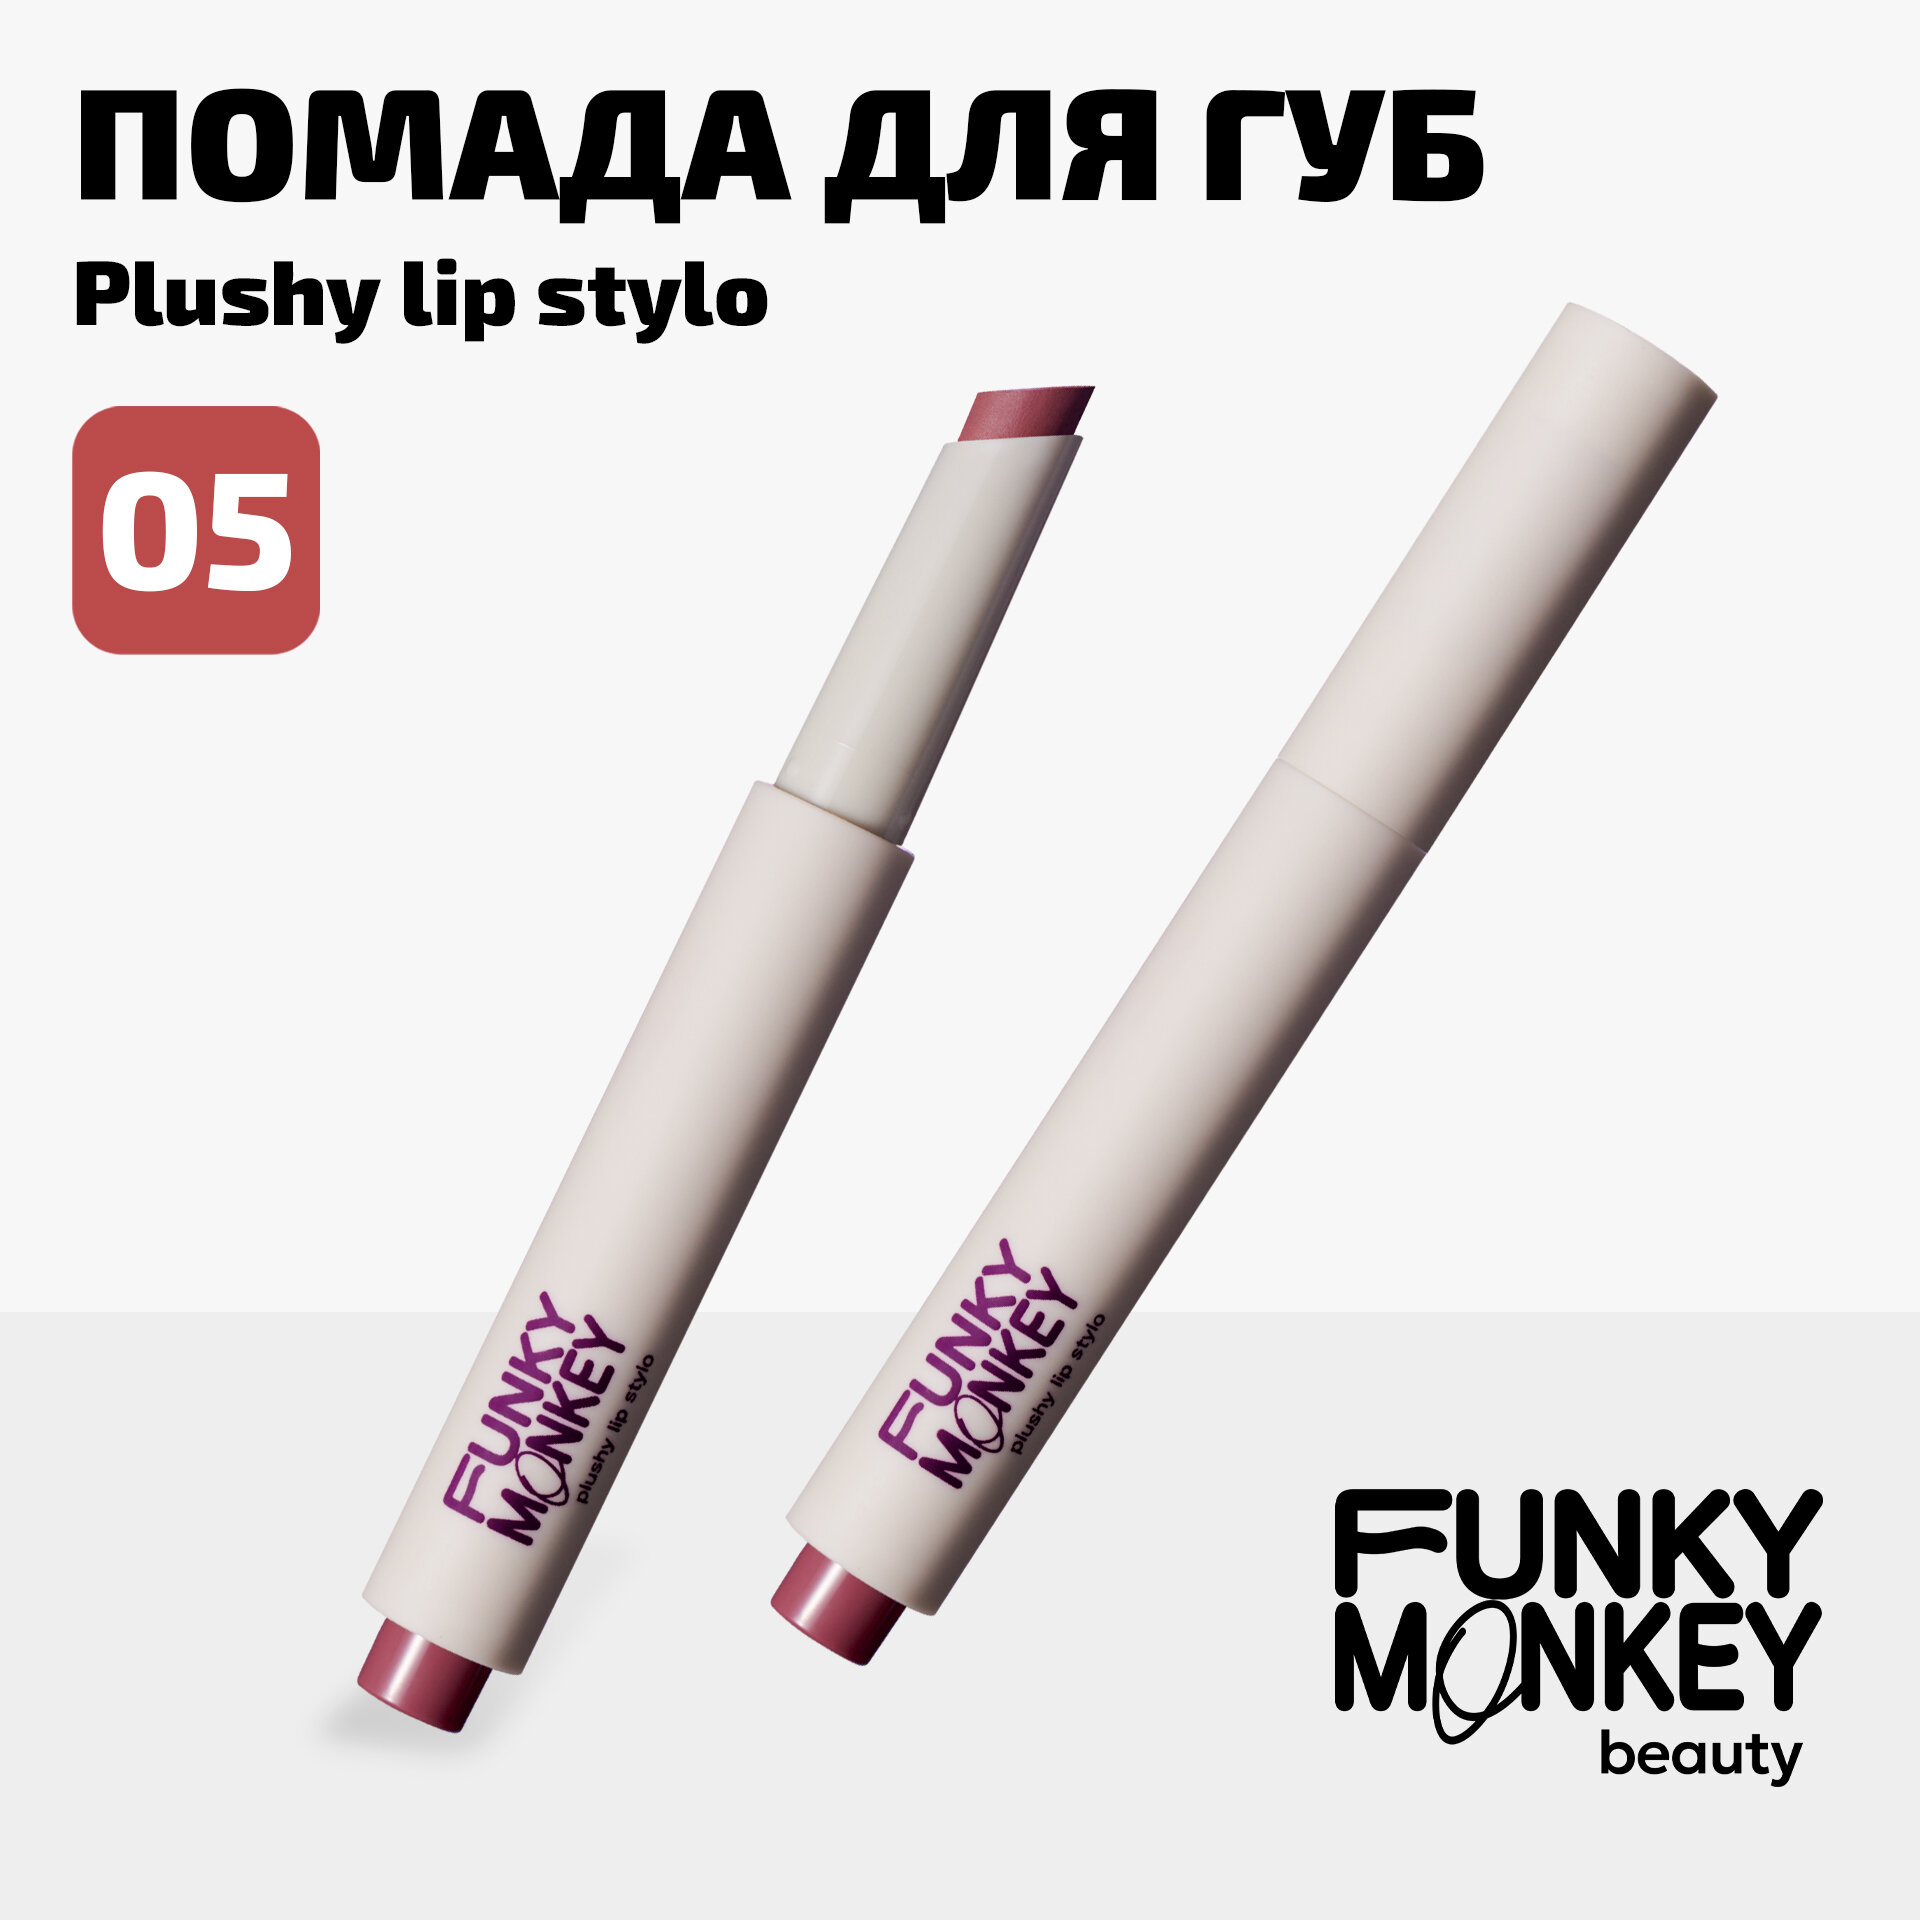 Funky Monkey Помада для губ плюшевая Plushy lip stylo тон 05